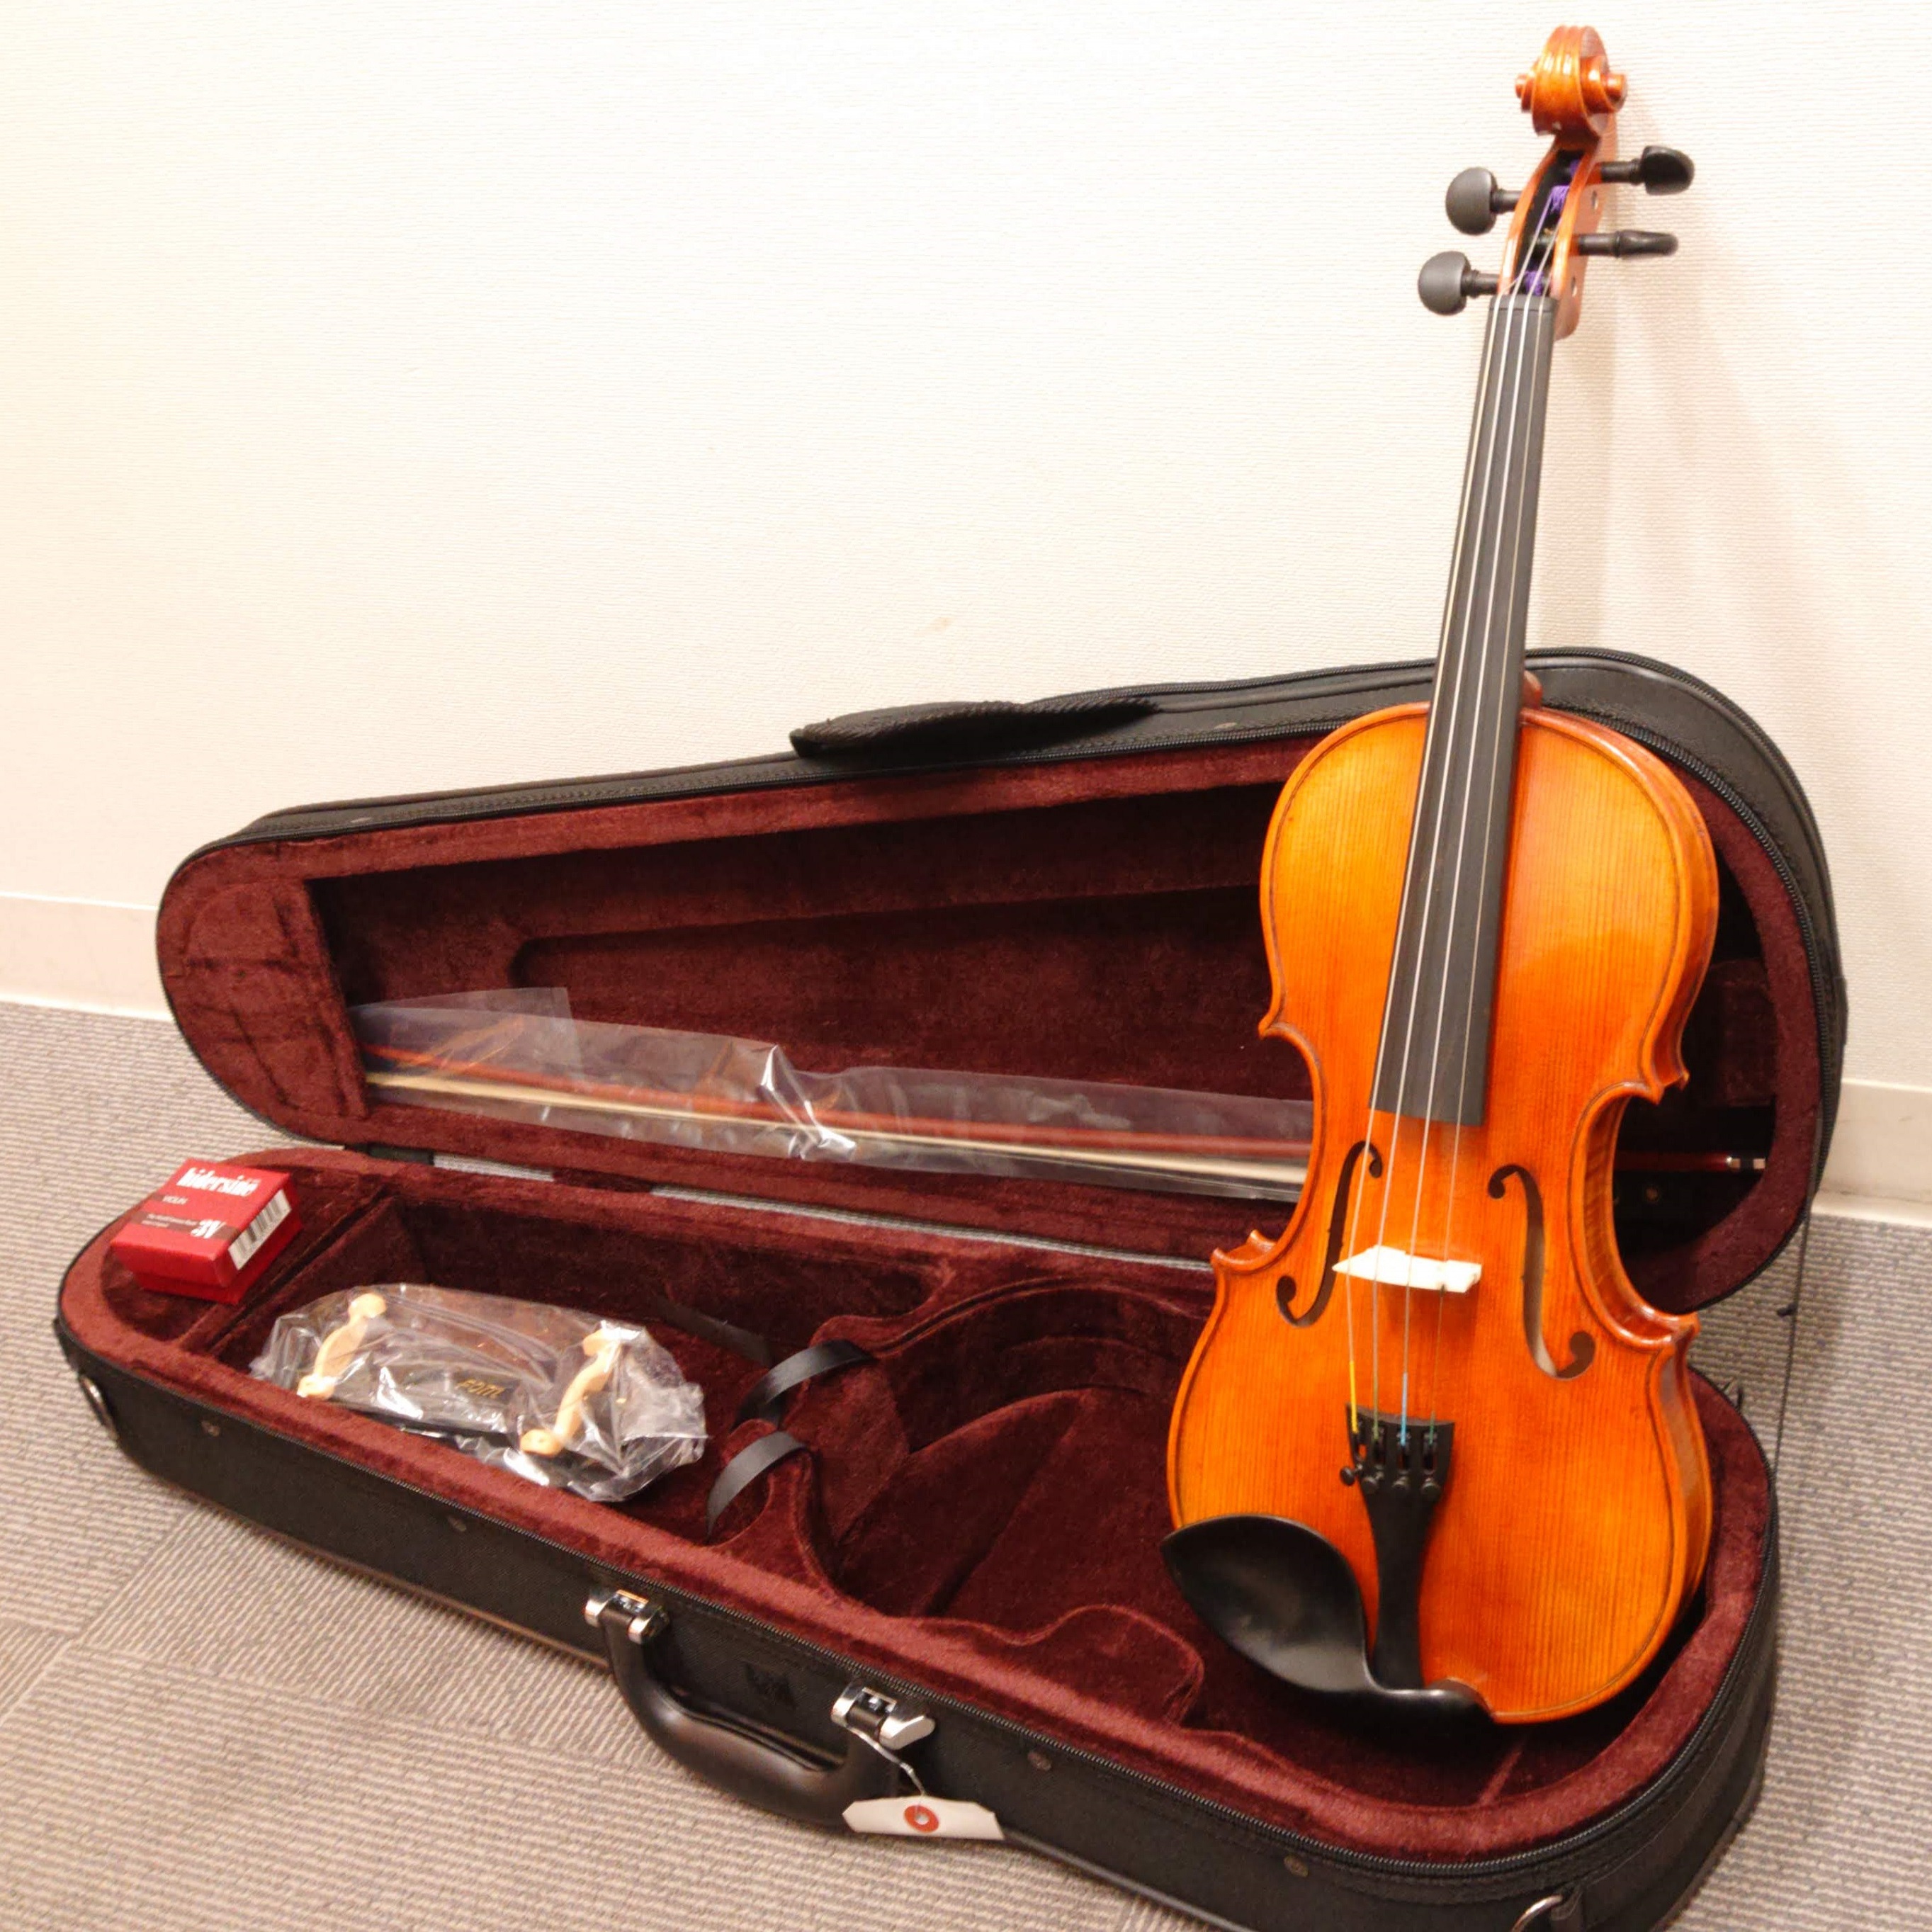 Ars Music Meister 4/4 バイオリンお返事をお待ちしております